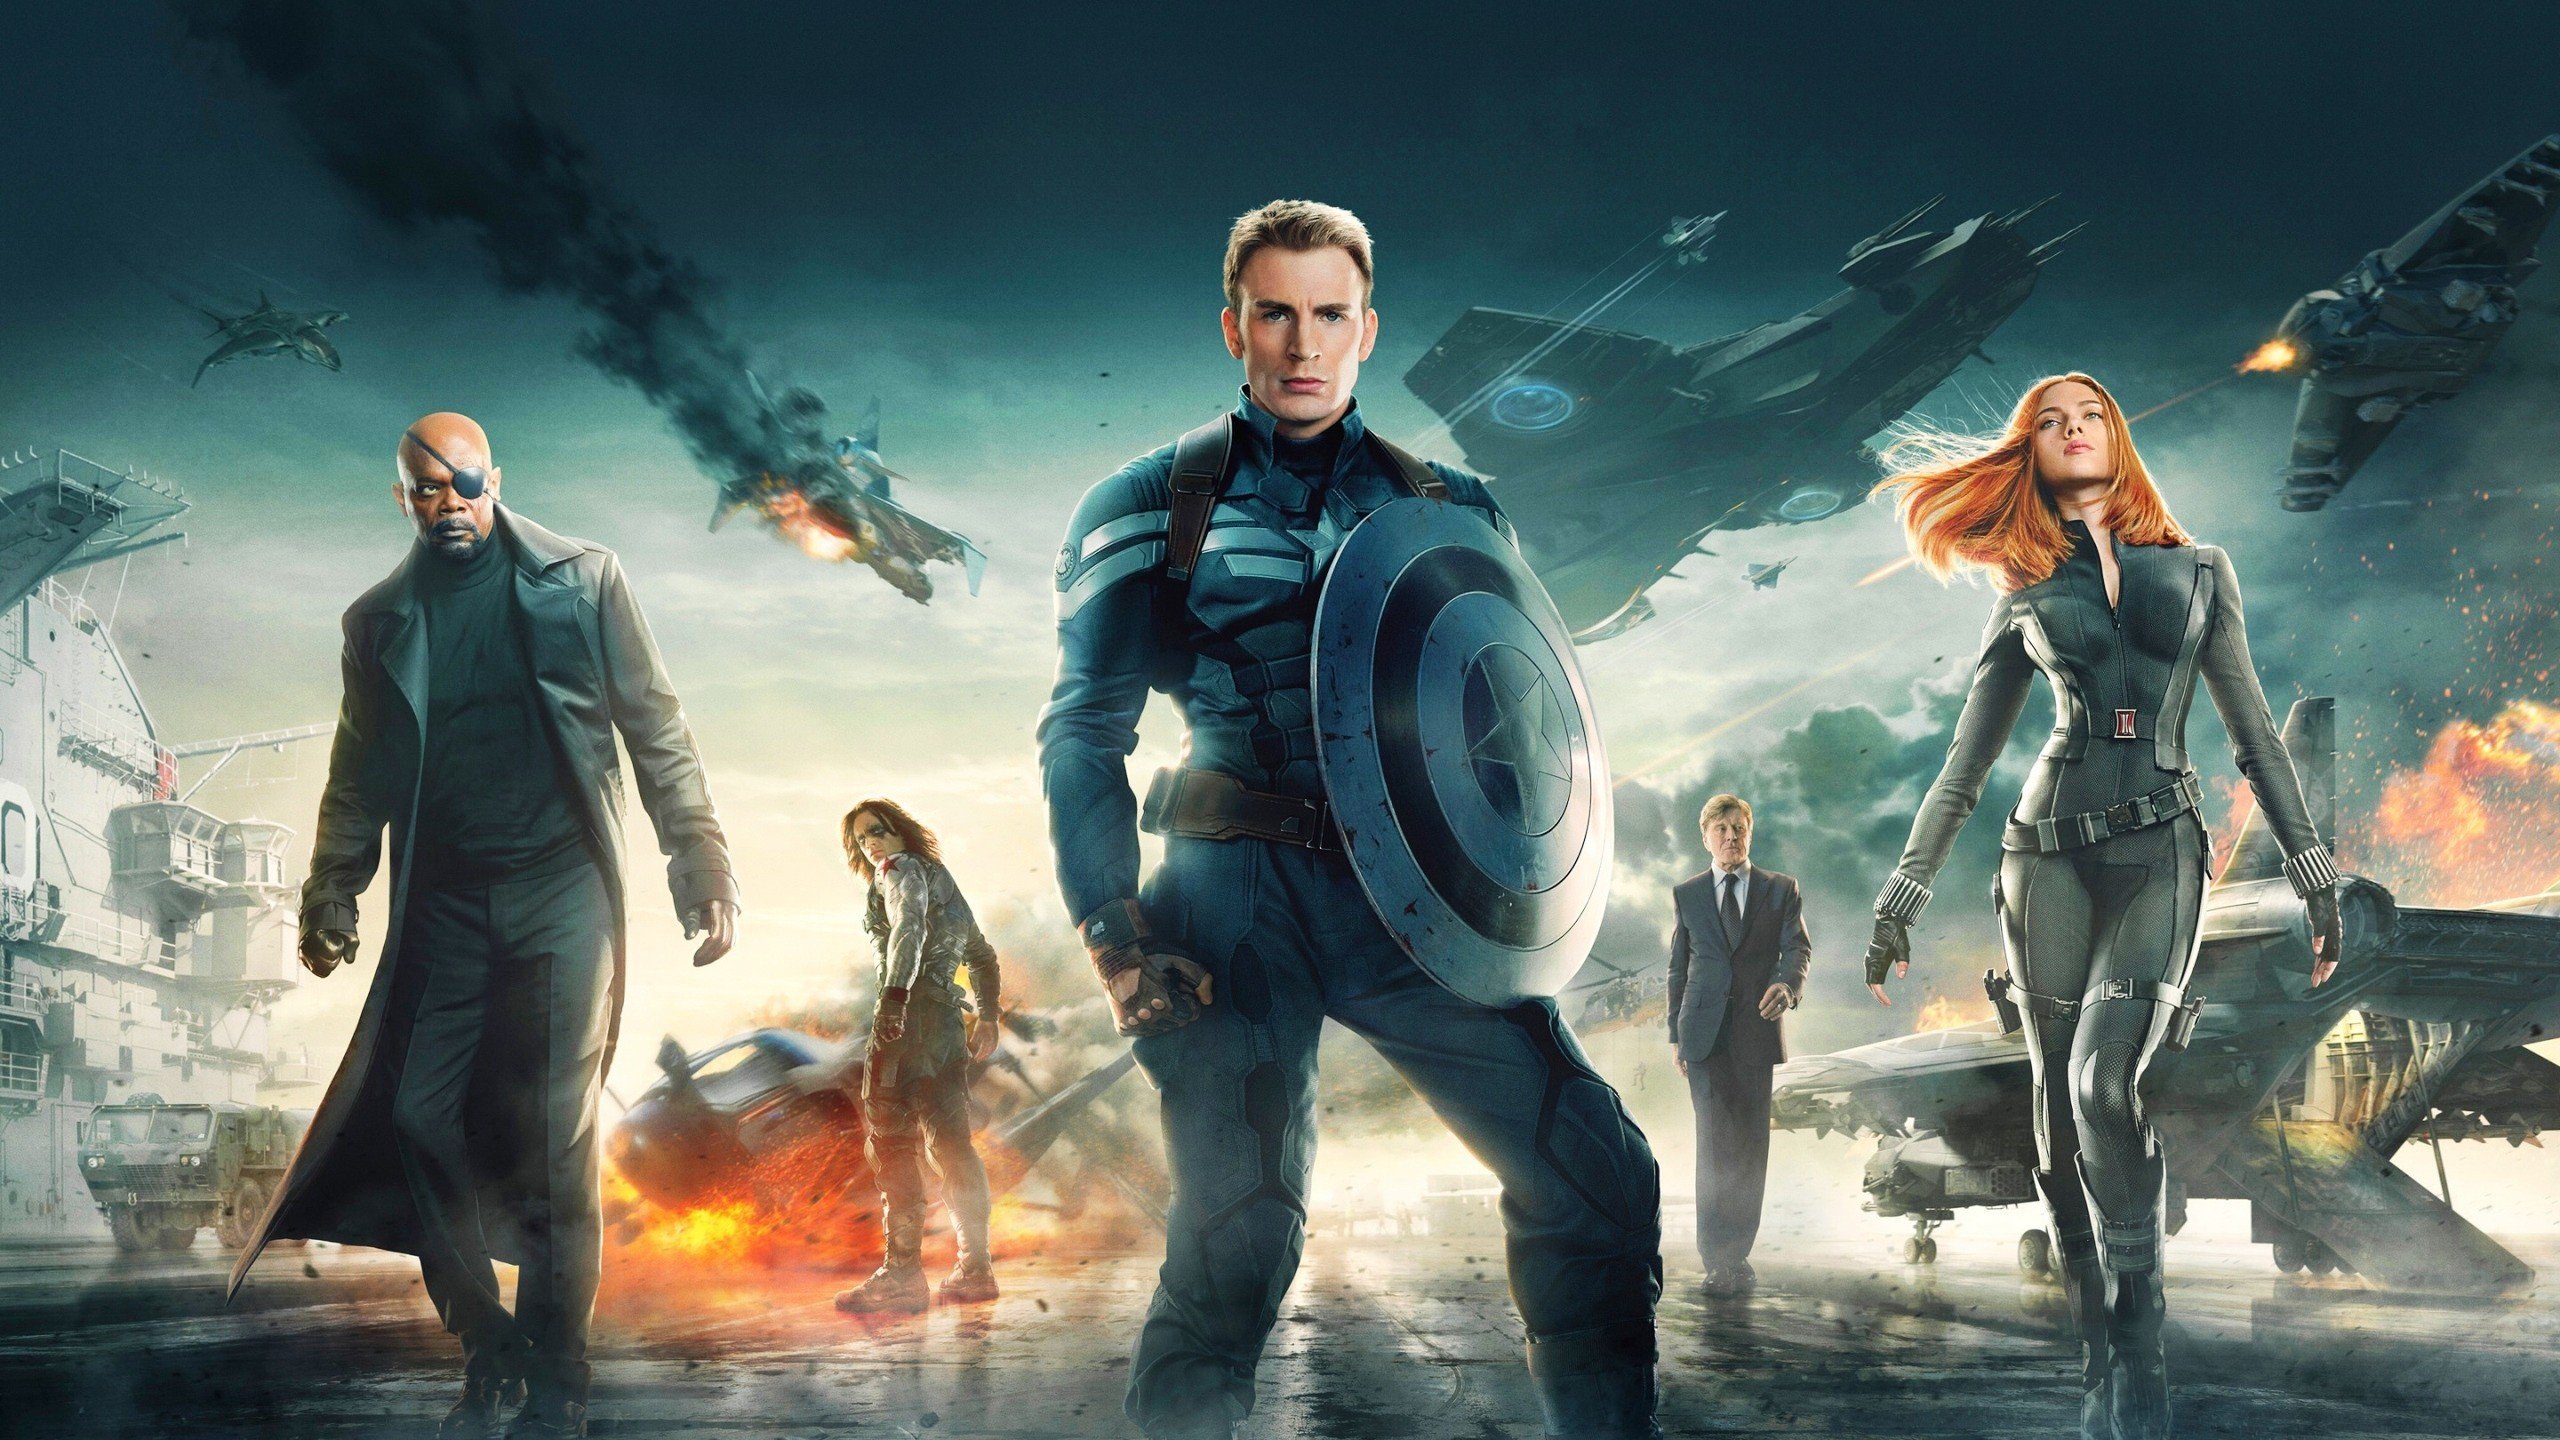 Captain America wallpaper by ItsBlackheart  Download on ZEDGE  1111